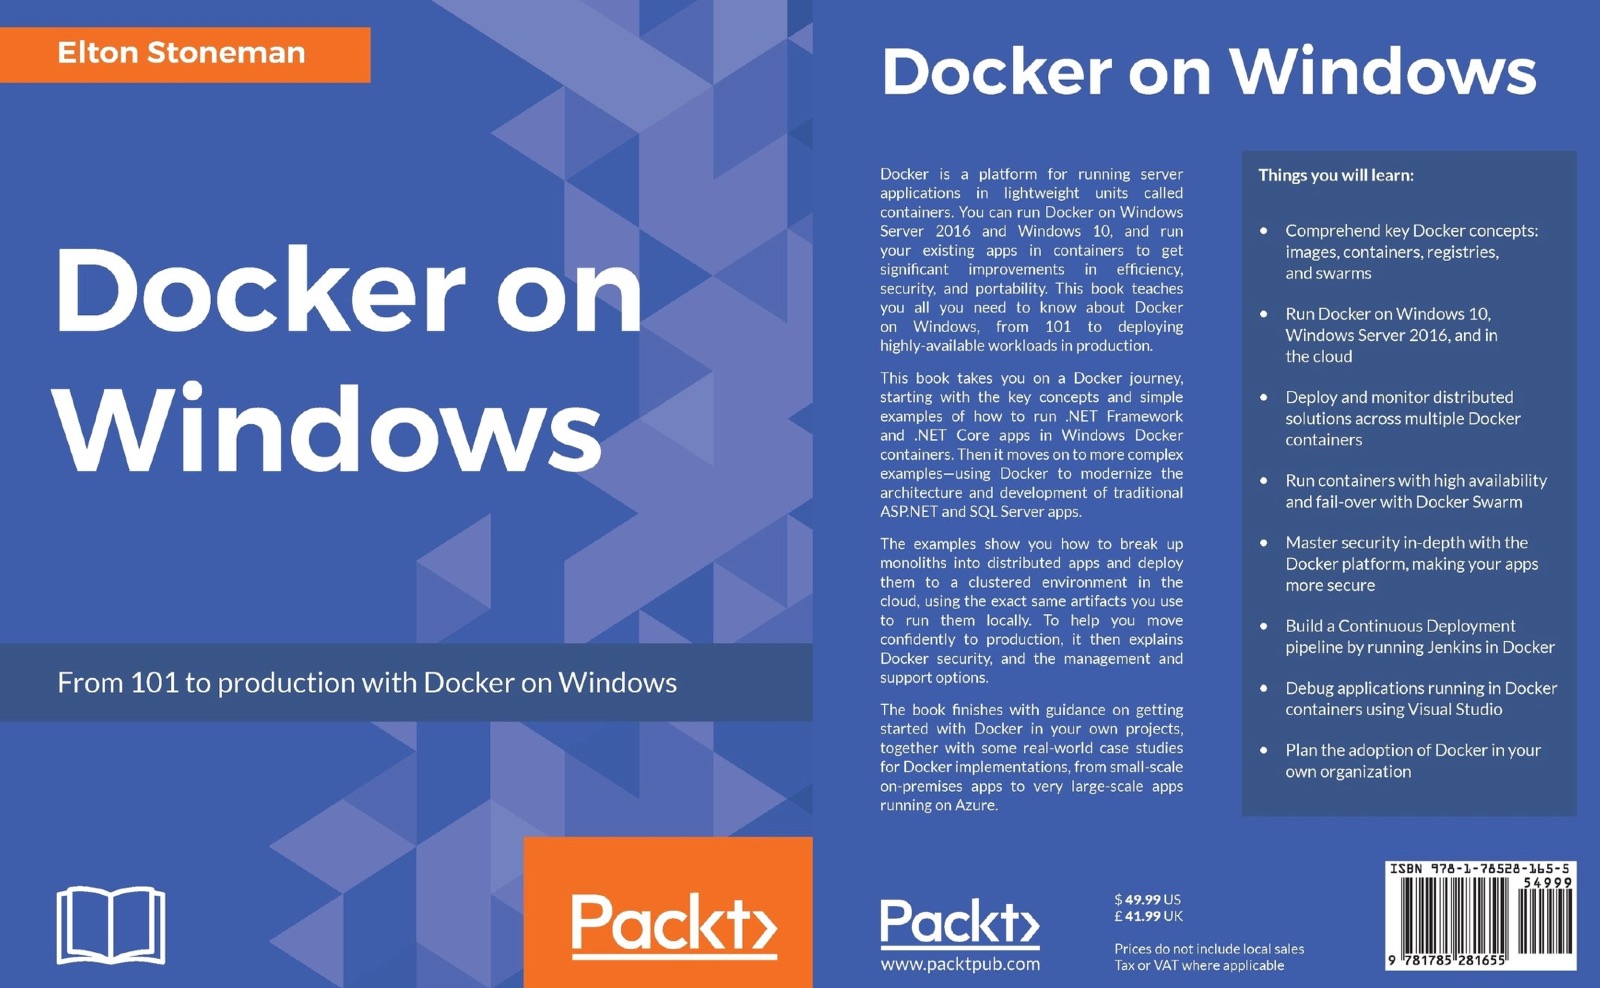 Docker on Windows: the book, by Elton Stoneman